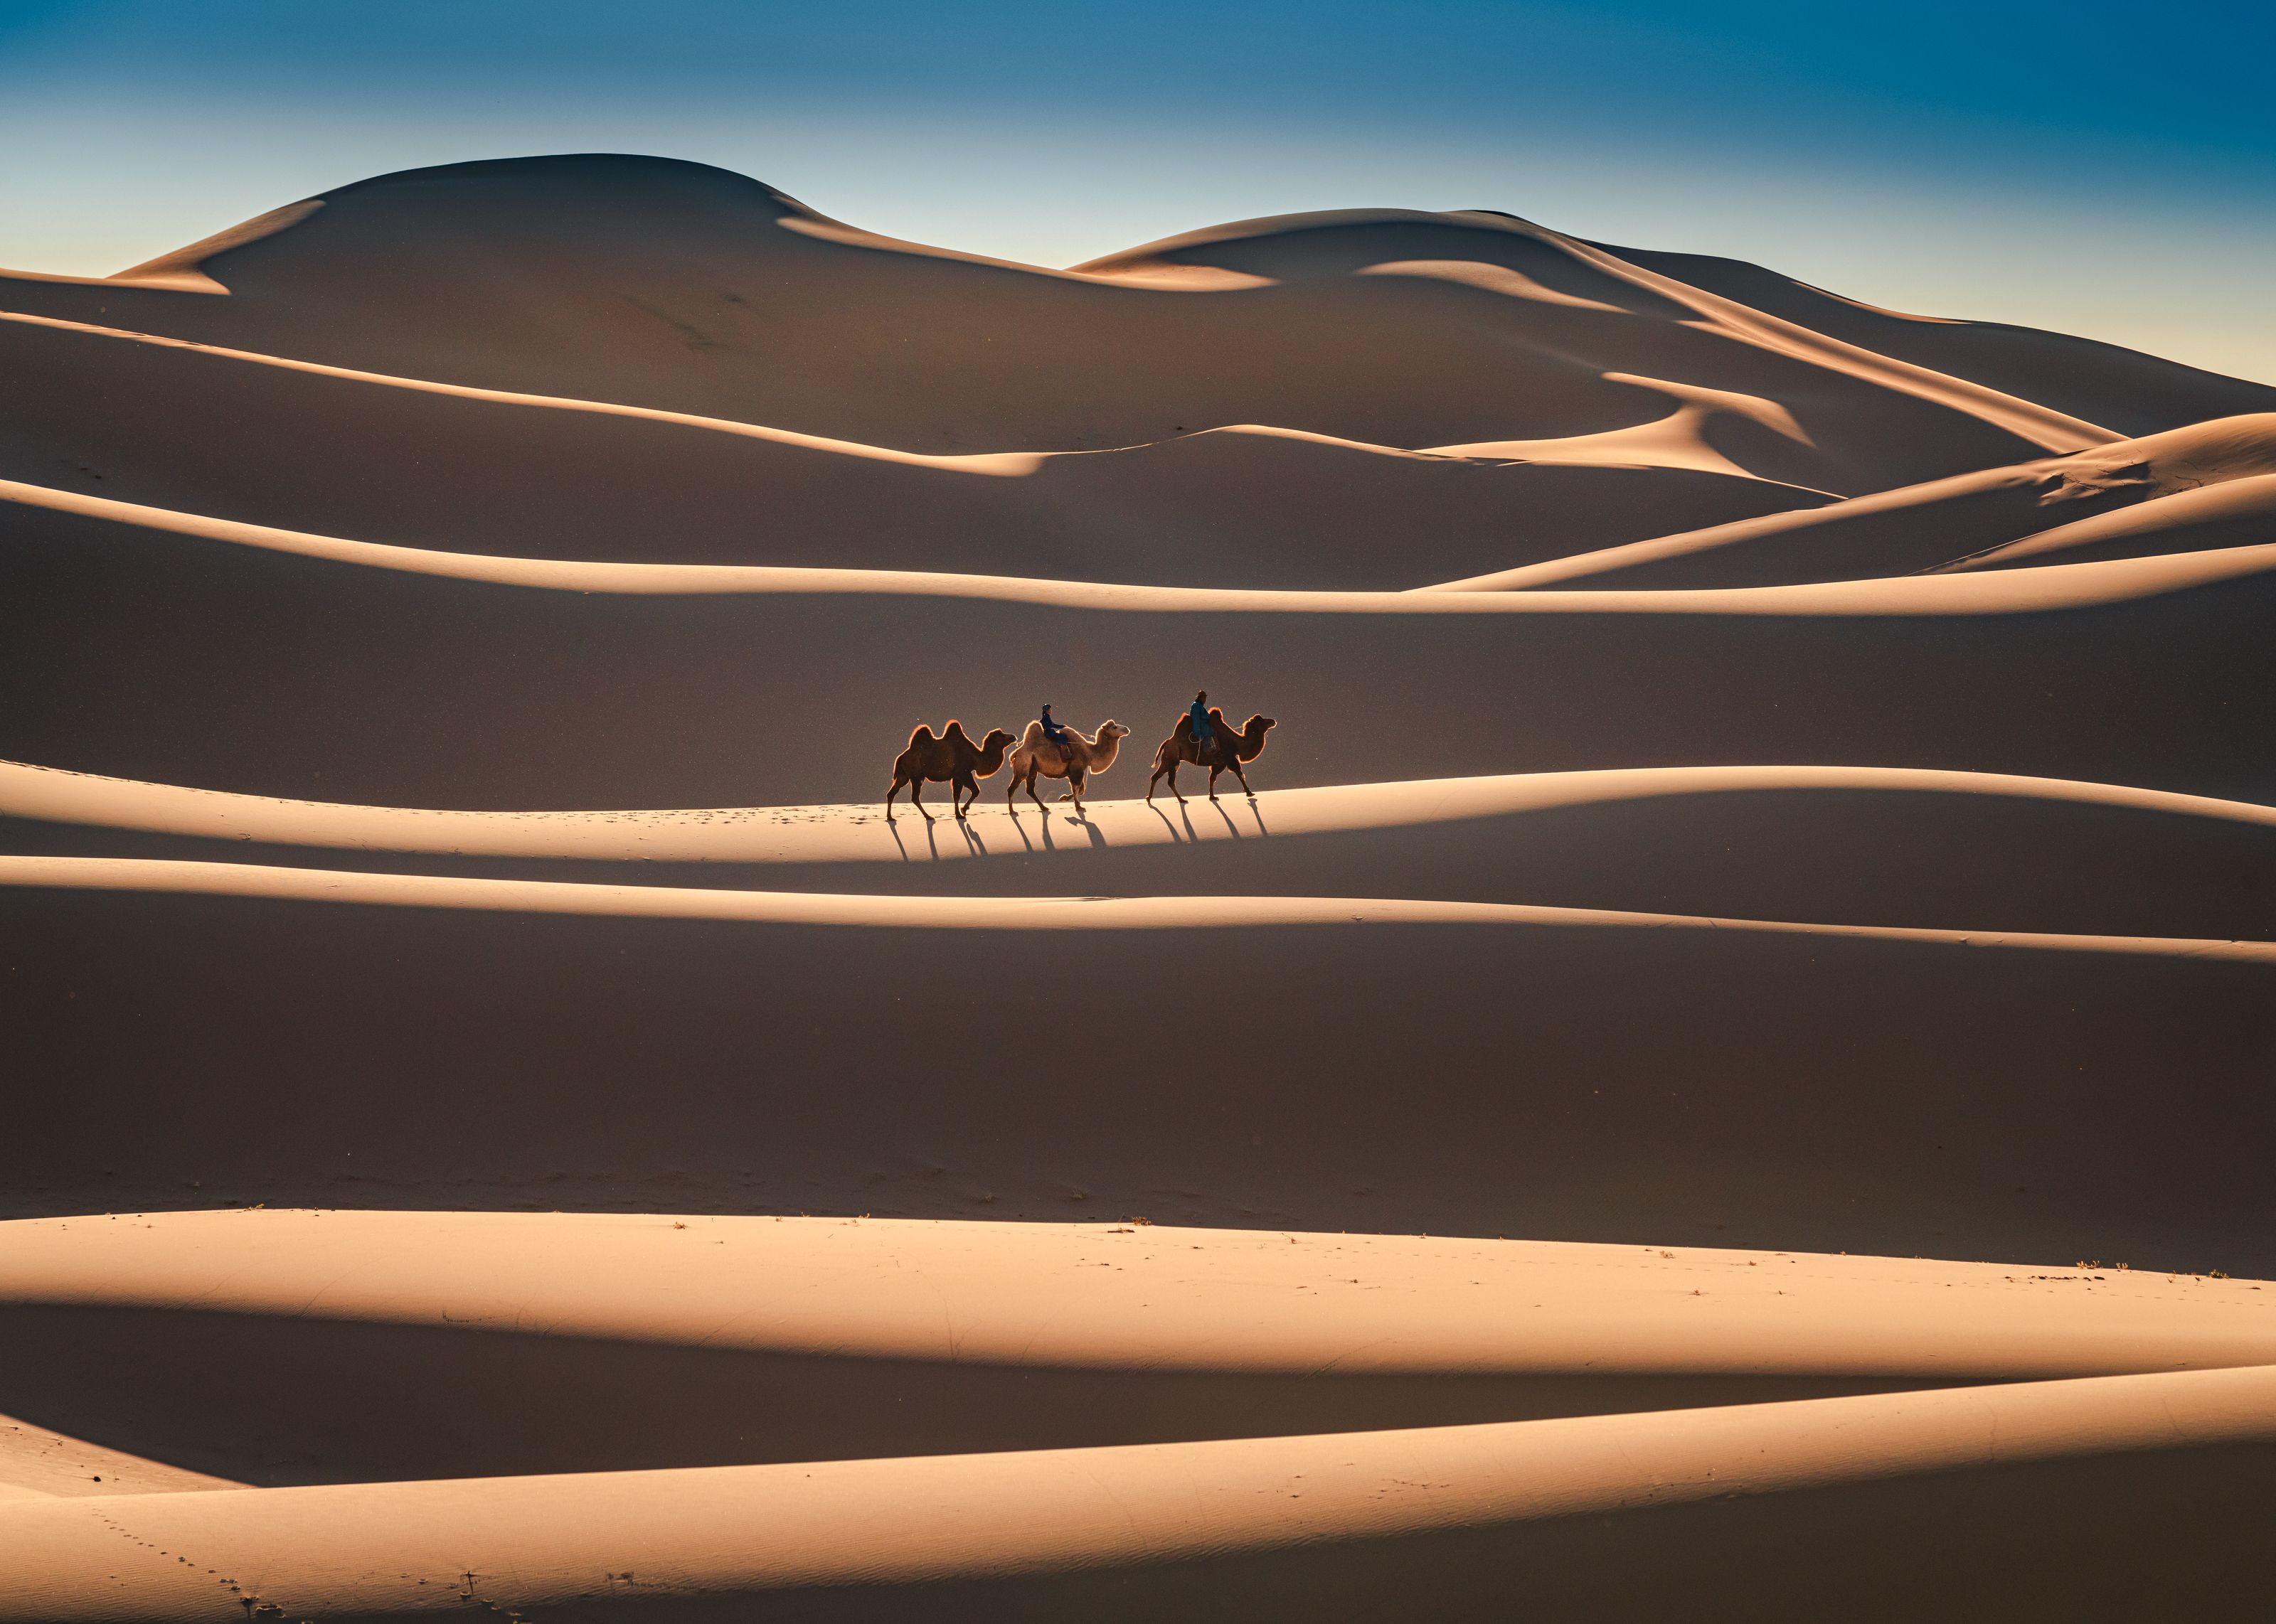 Gobi Desert is one of the biggest deserts in the world.